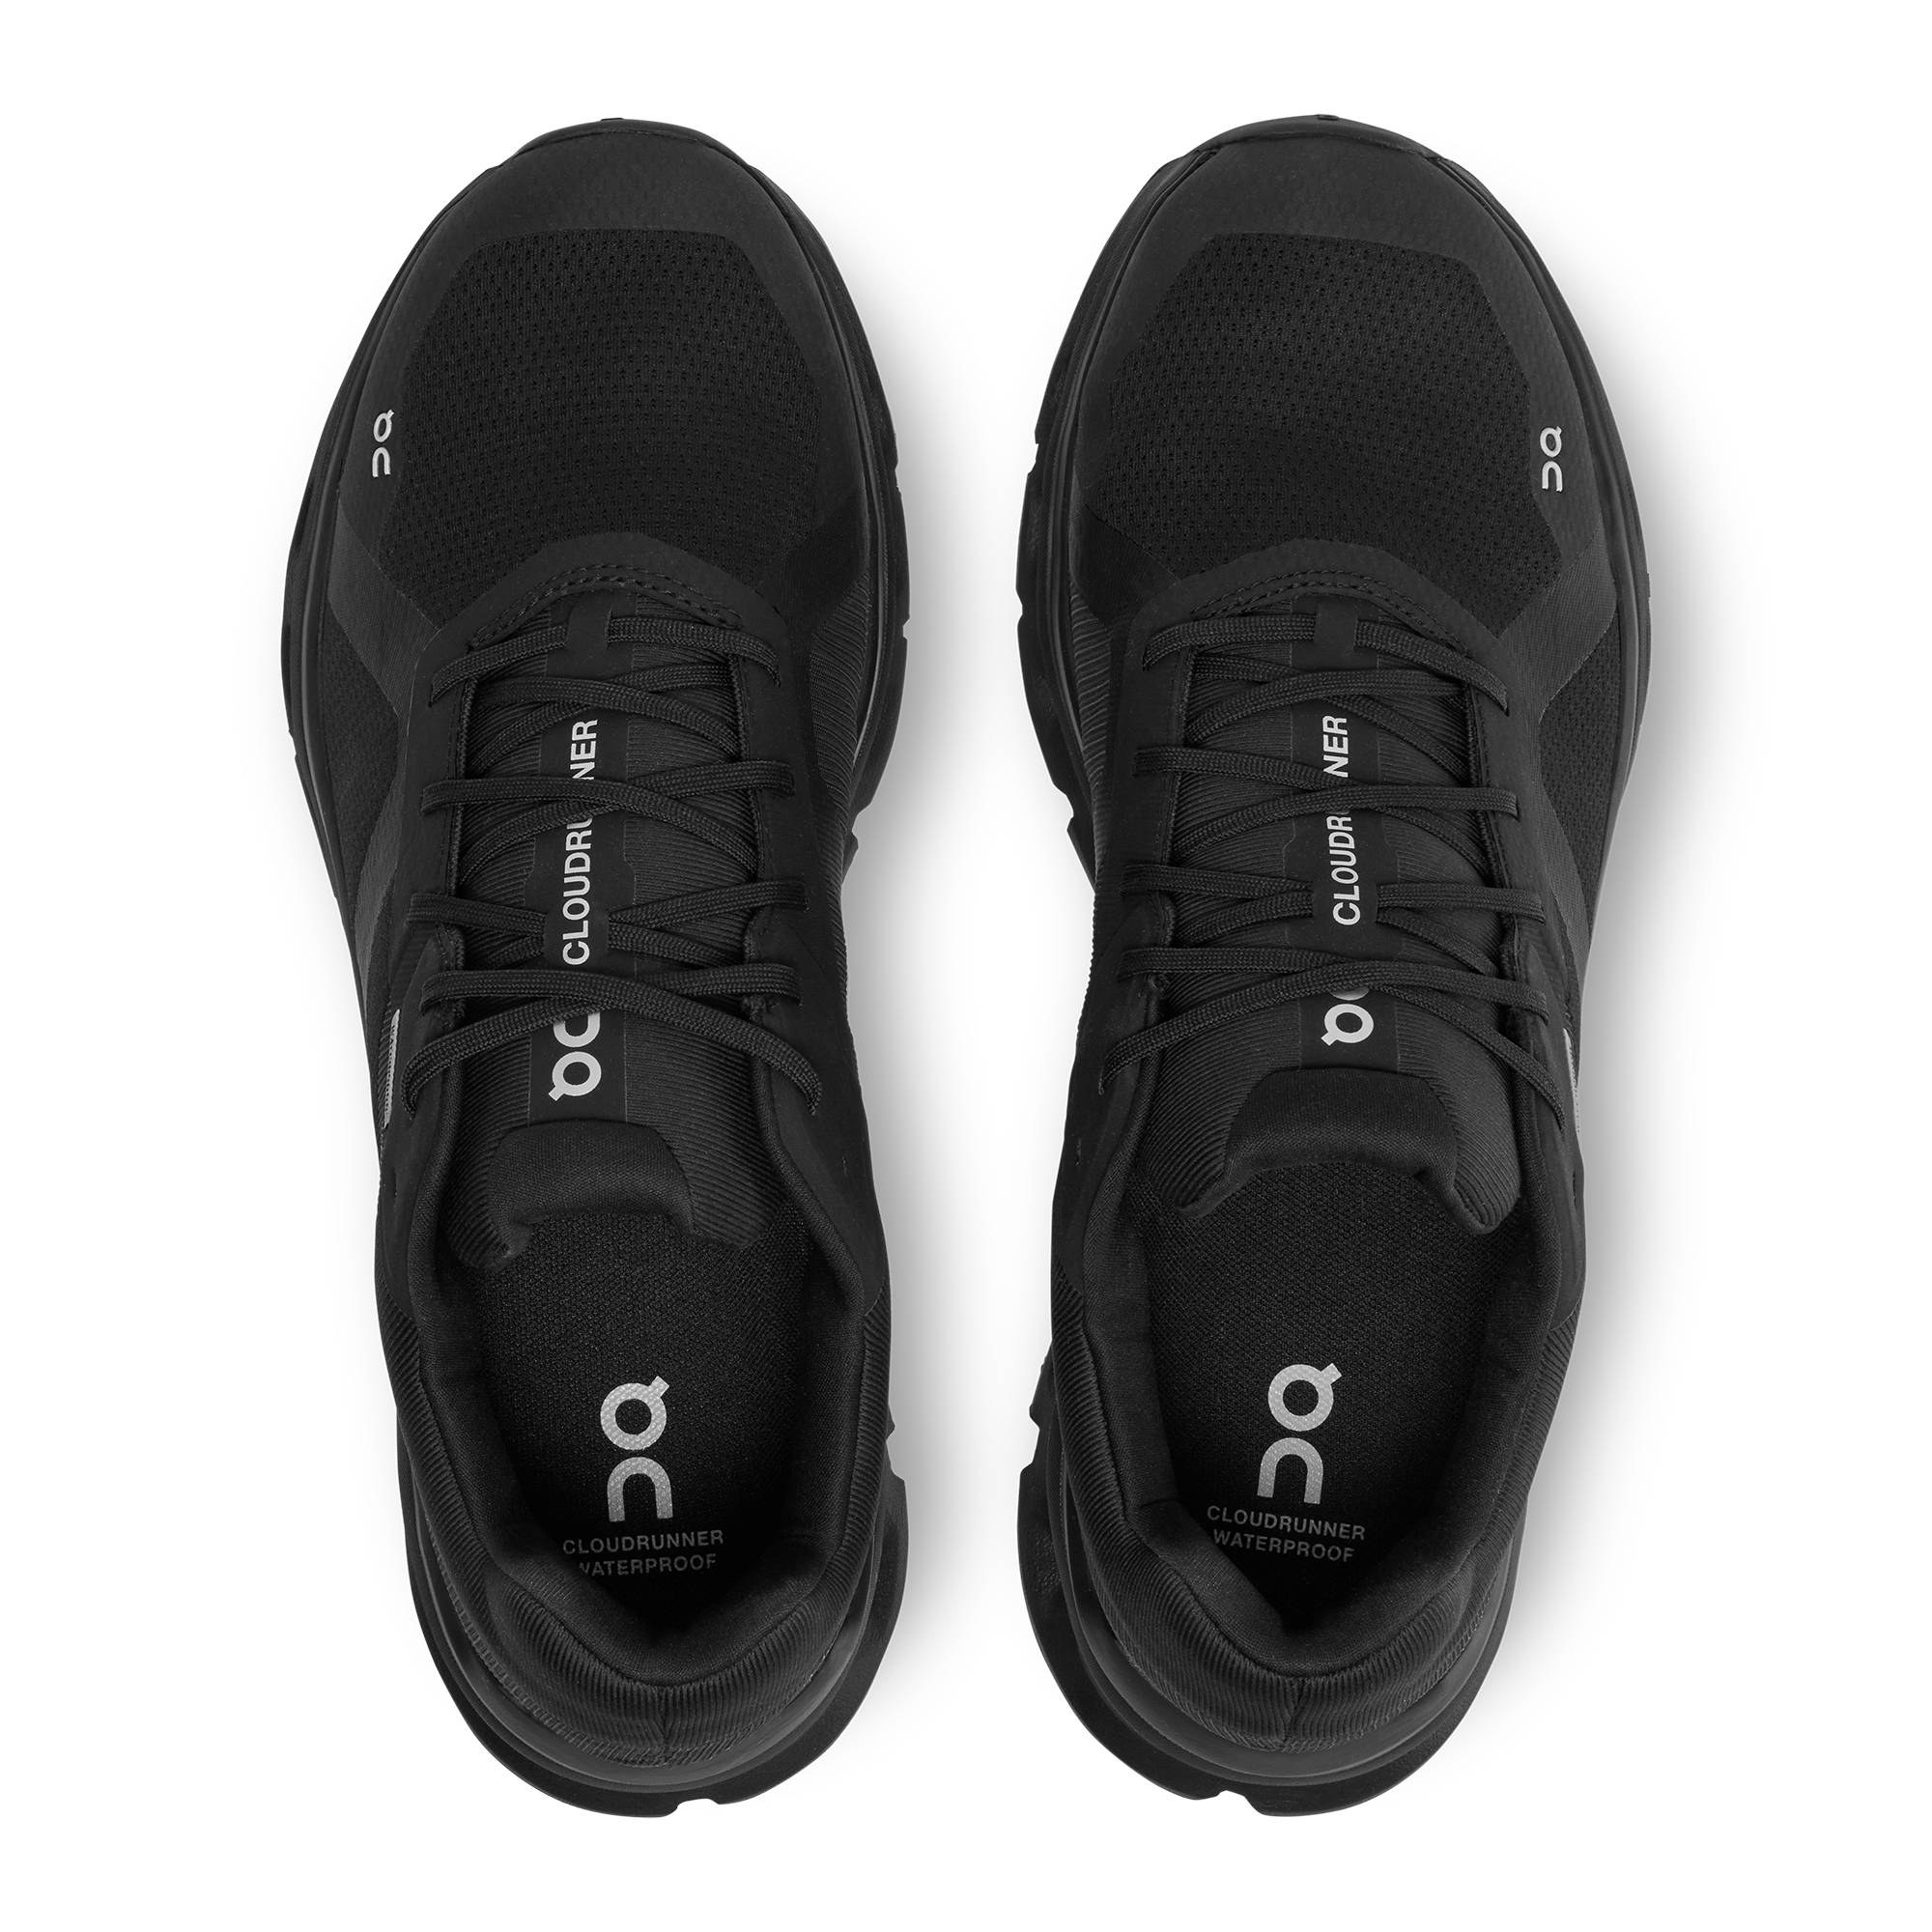 Zapatillas de deporte negras impermeables Cloudrunner de On Running